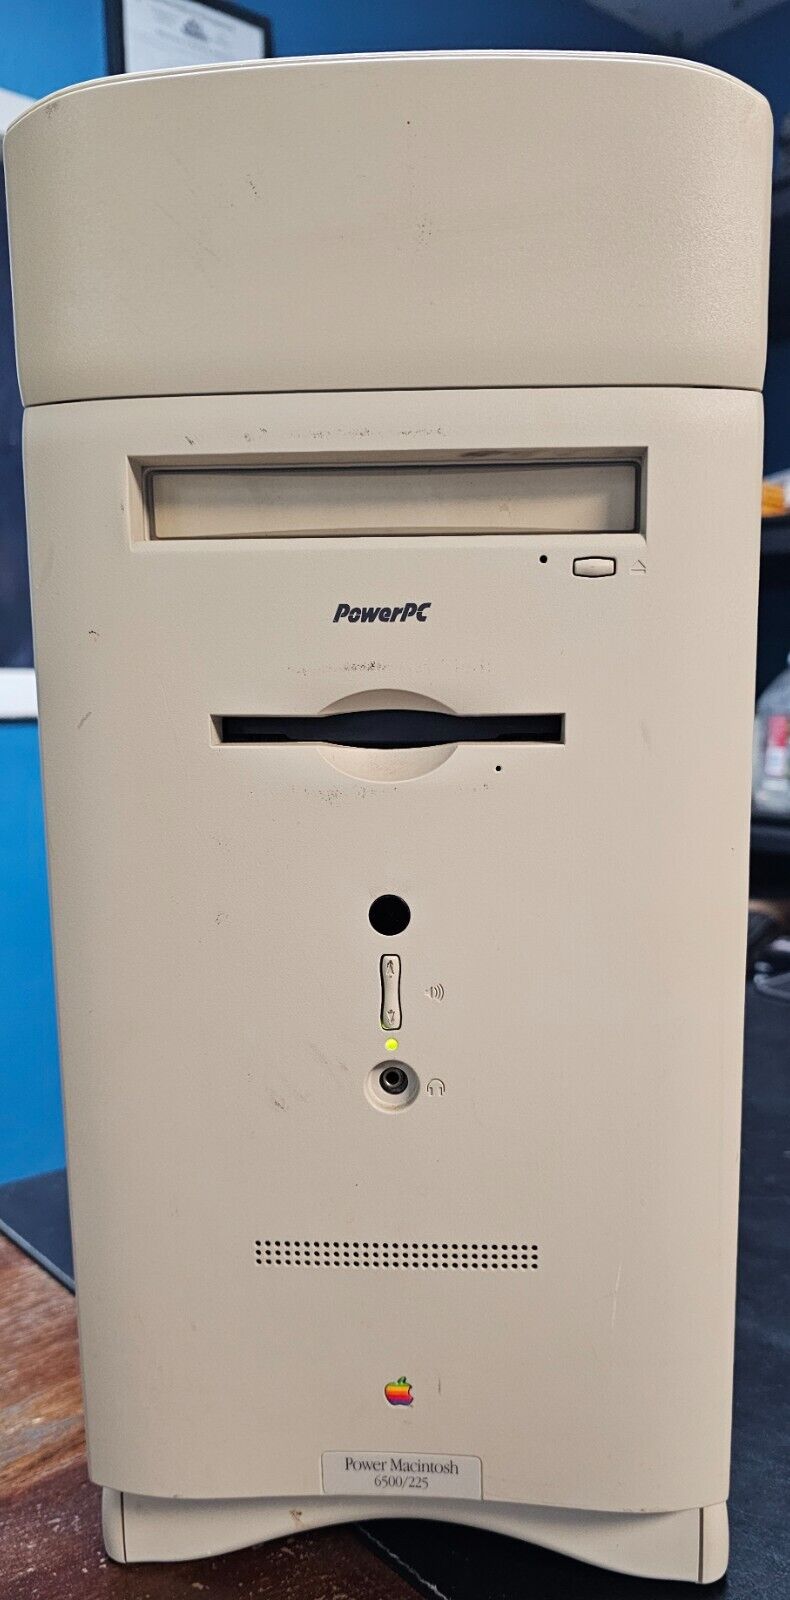 Vintage Apple Power Macintosh 6500/225 Desktop, Model M3548 Powers ON - Untested